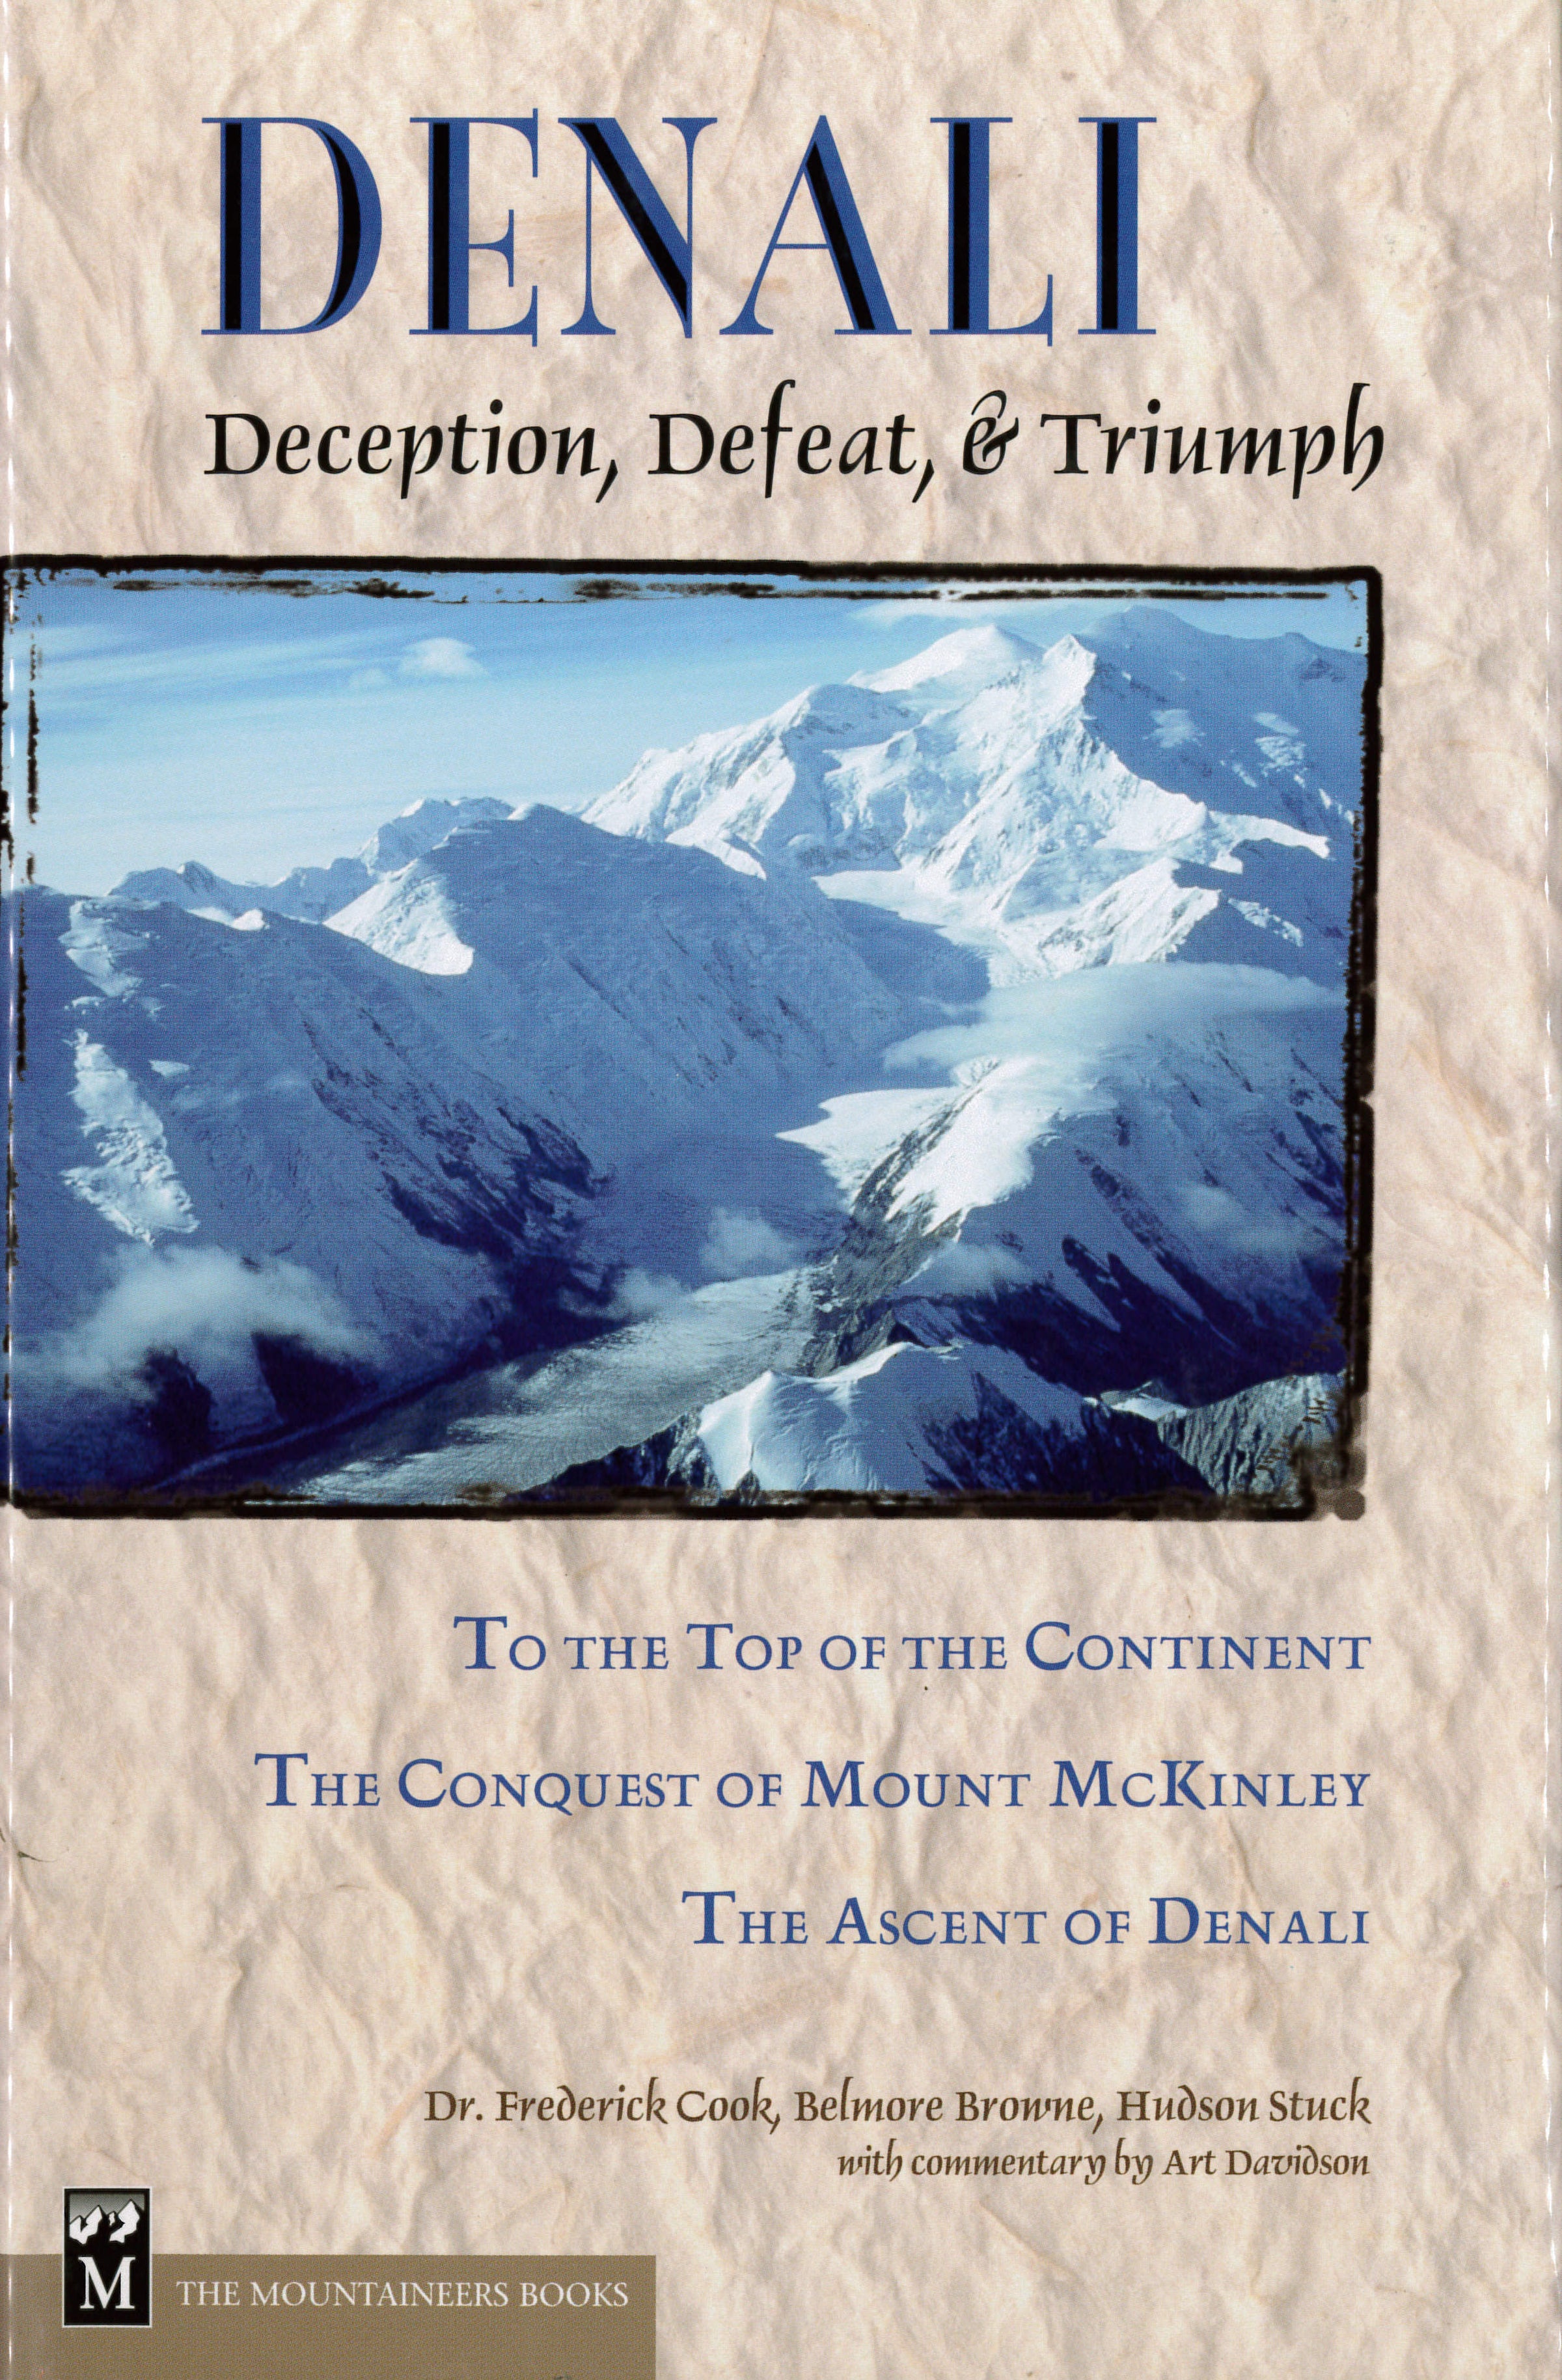 Denali - Deception, Defeat, & Triumph